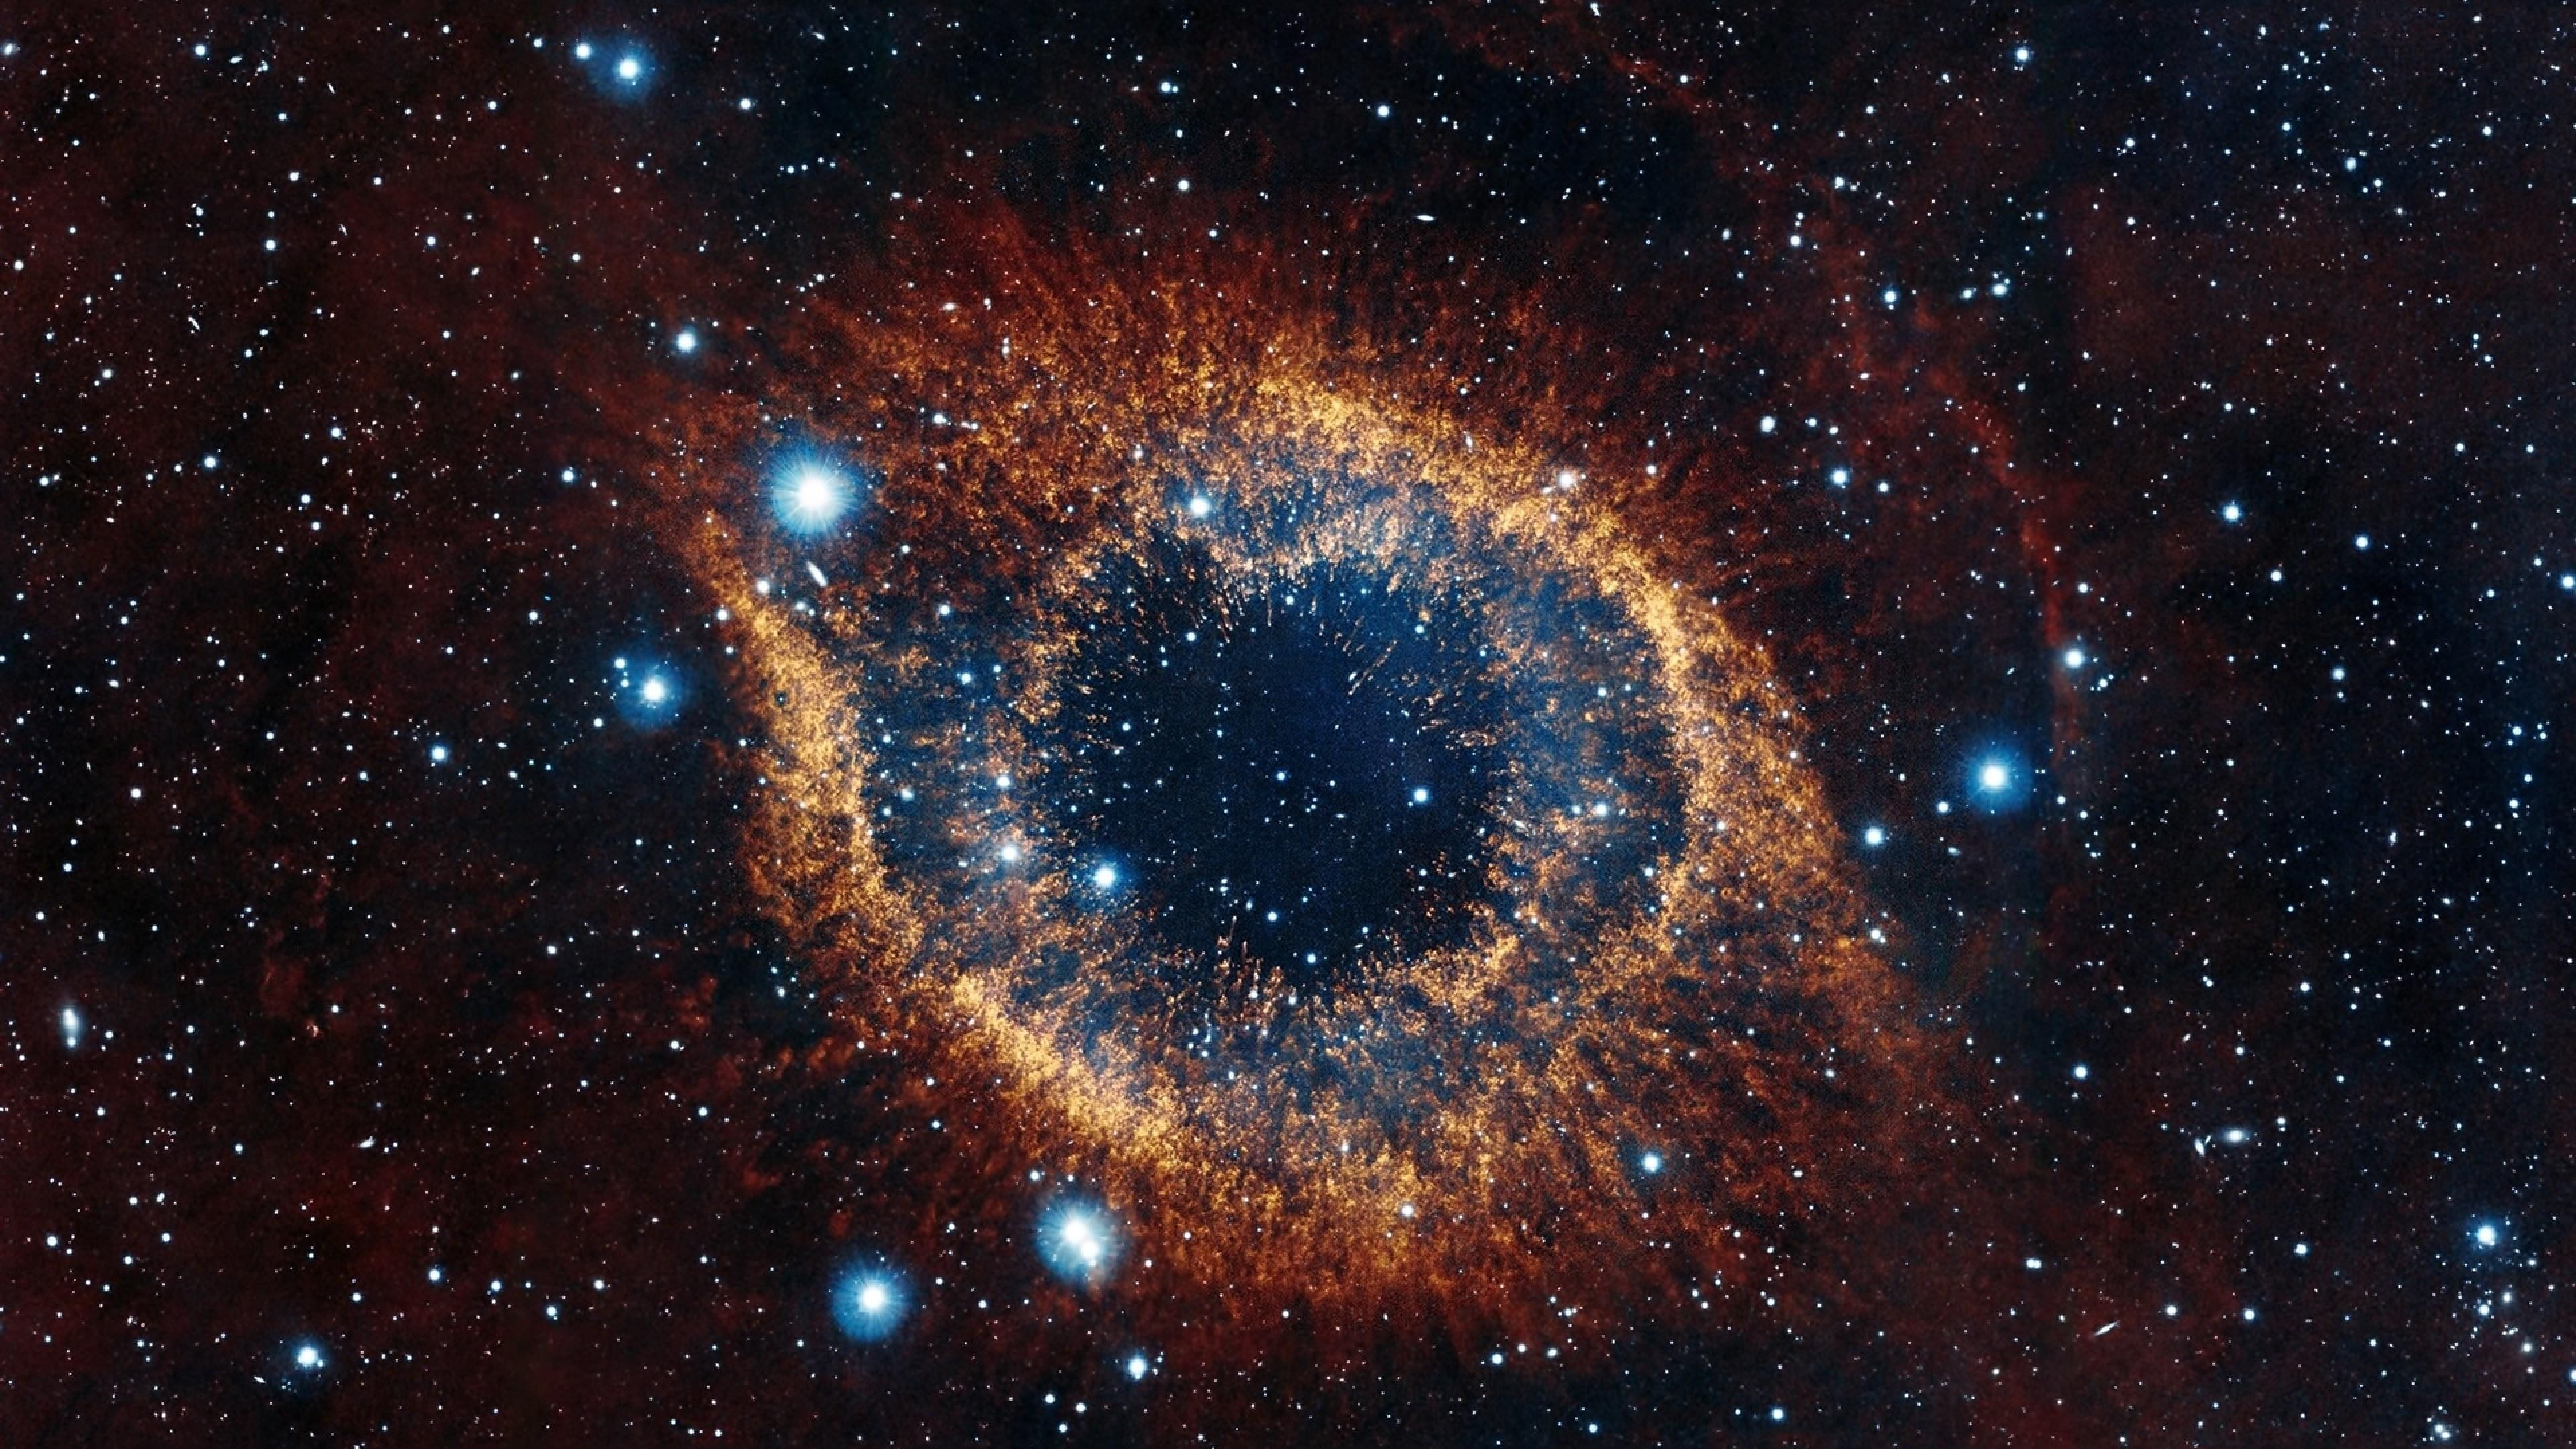 3840x2160 cosmos #universe helix nebula #helix #stars #nebula #explosion #4K # wallpaper #hdwallpaper #desktop | Nebula wallpaper, Helix nebula, Nebula